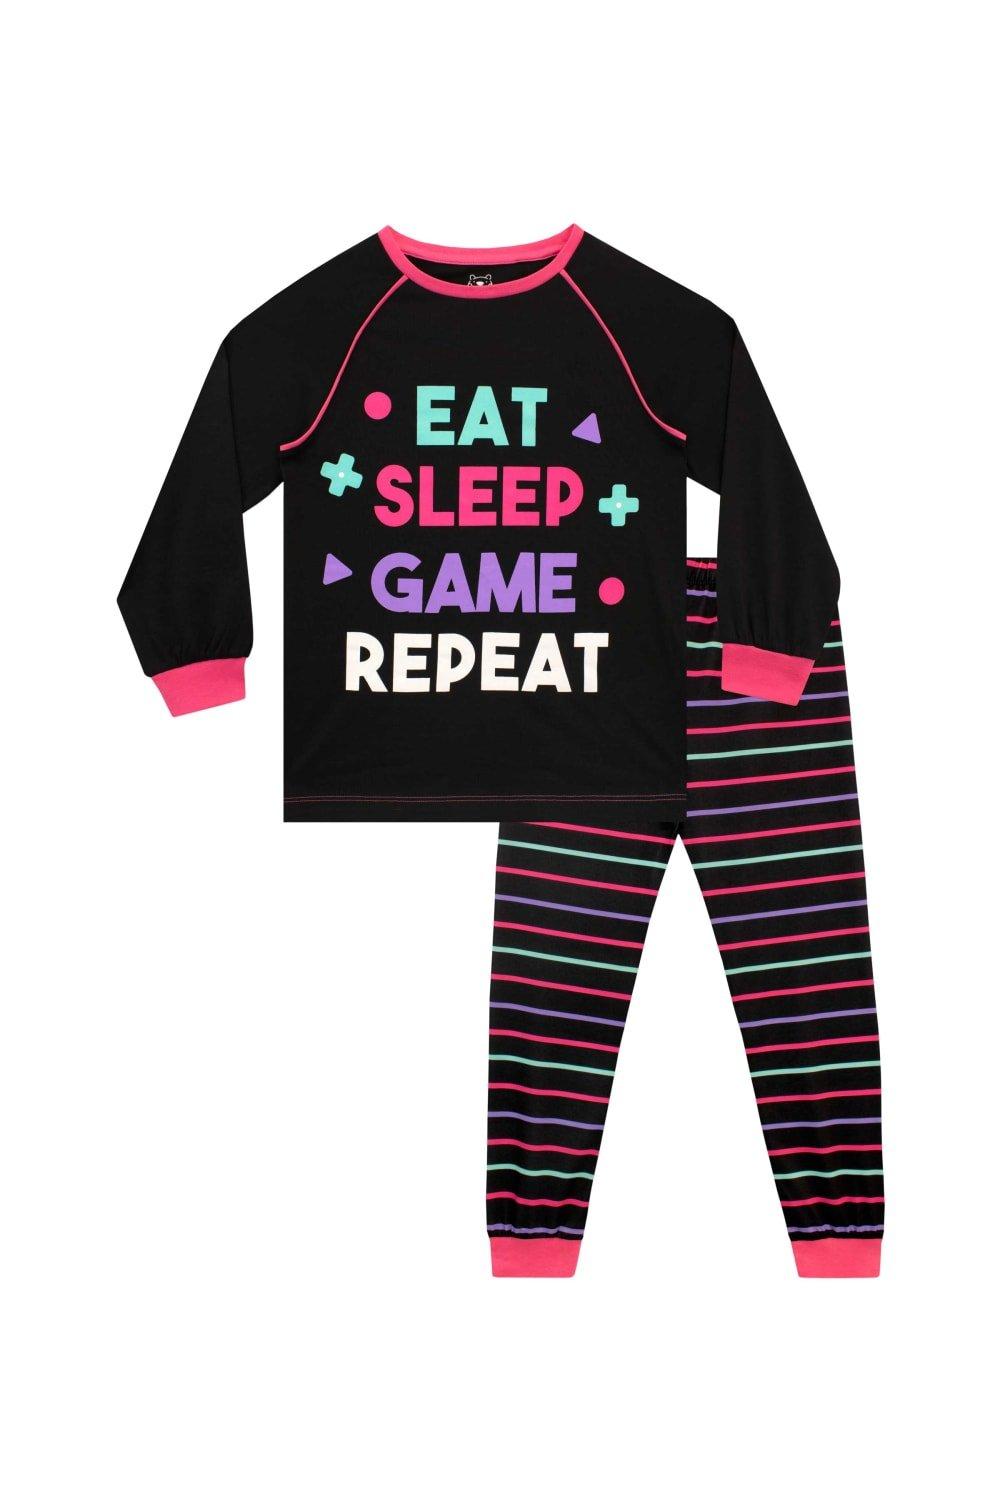 Eat Sleep Slogan Gaming Pyjamas